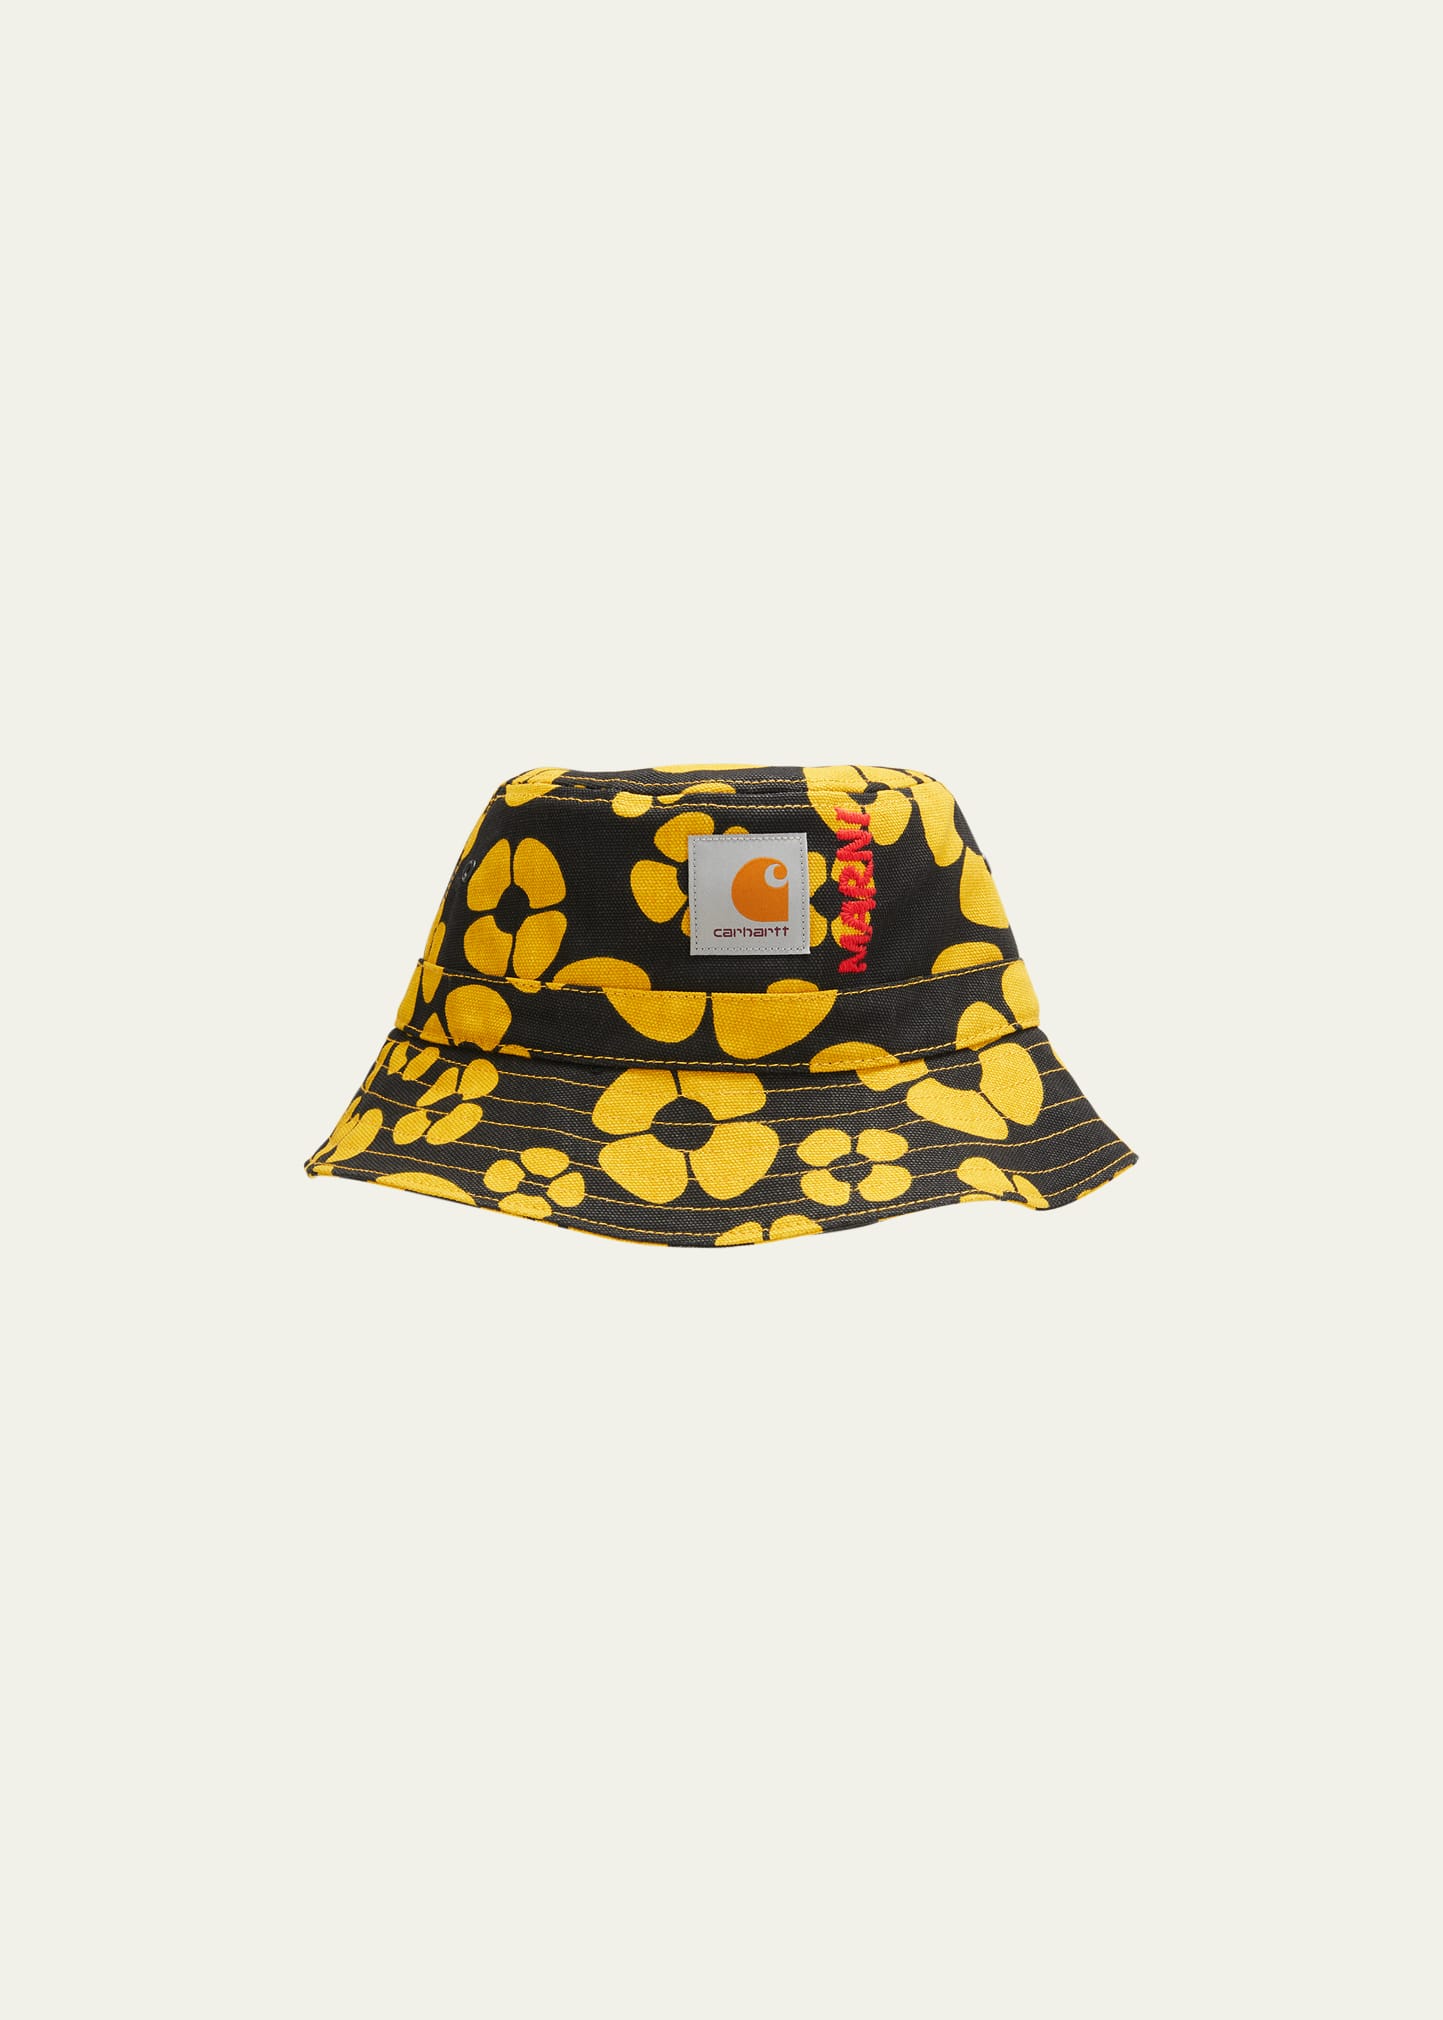 x Carhartt Men's Clover-Print Canvas Bucket Hat